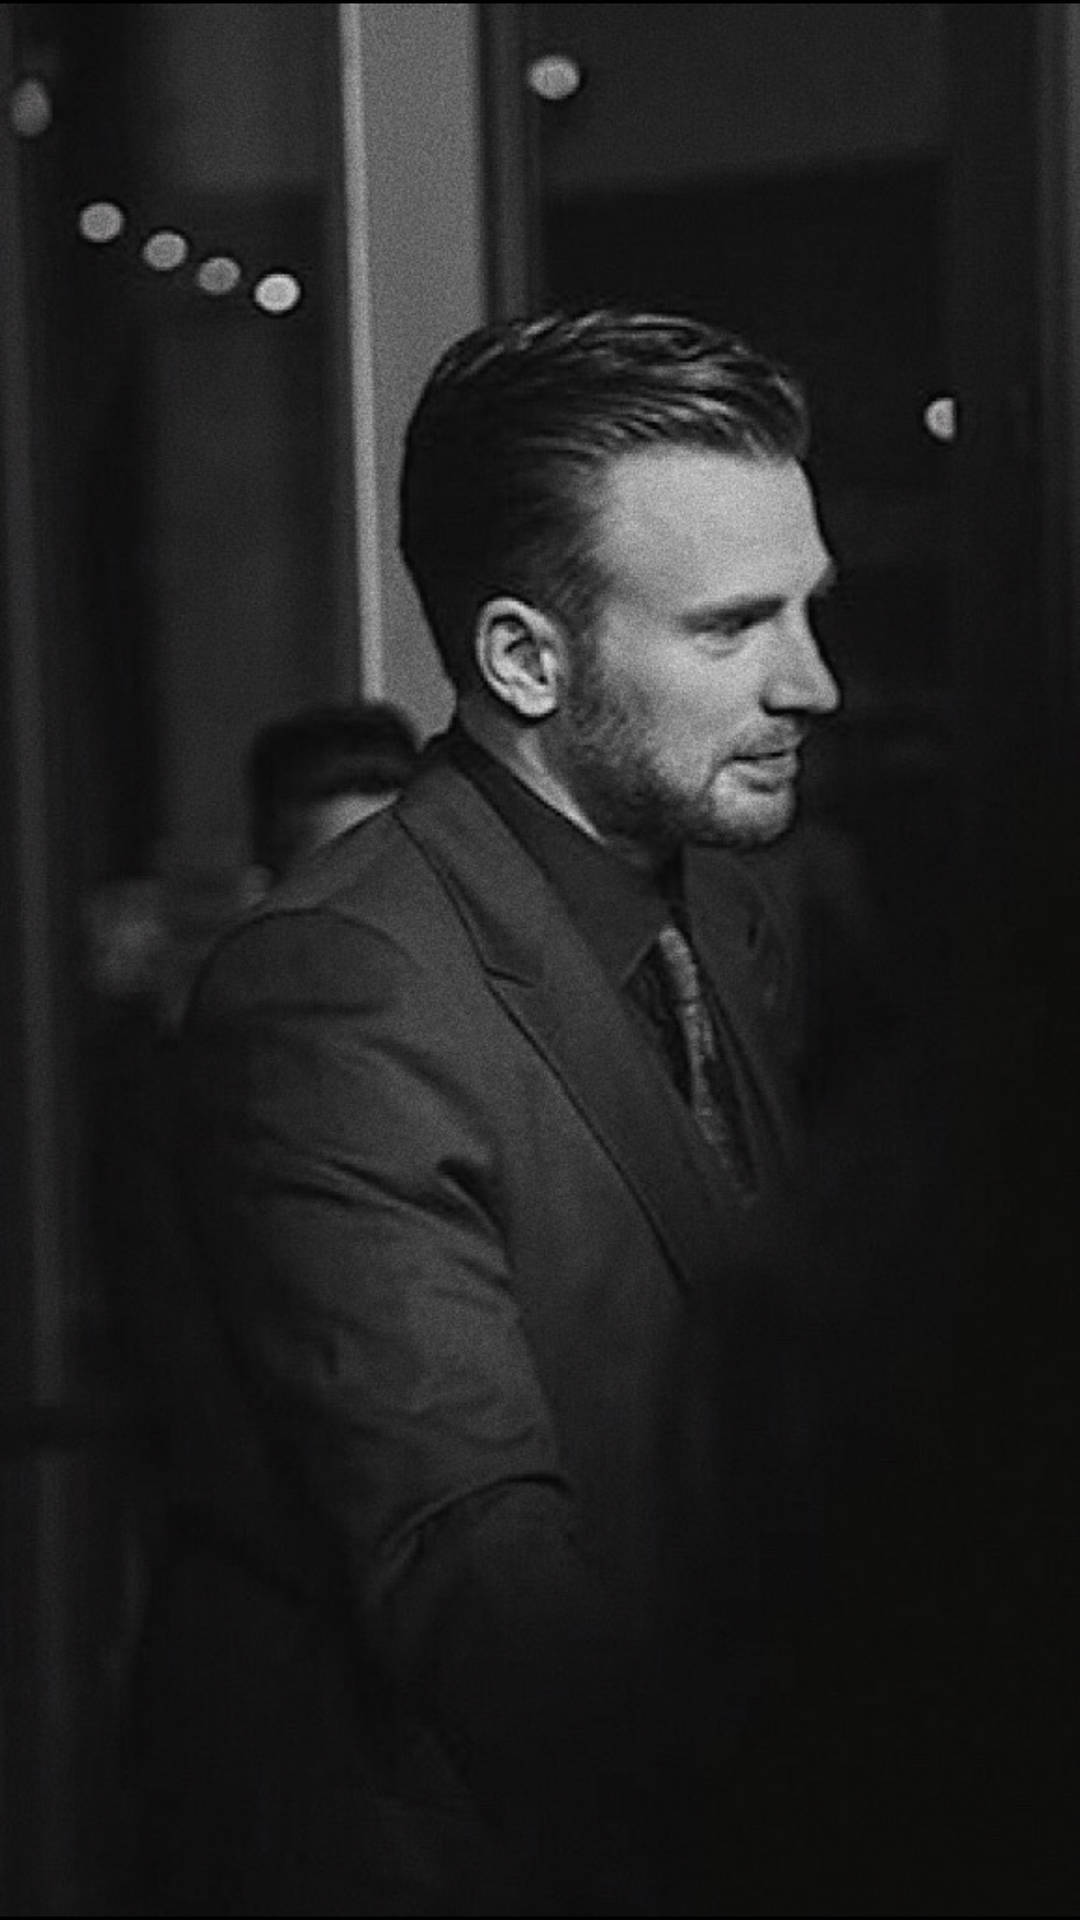 Chris Evans In A Suit